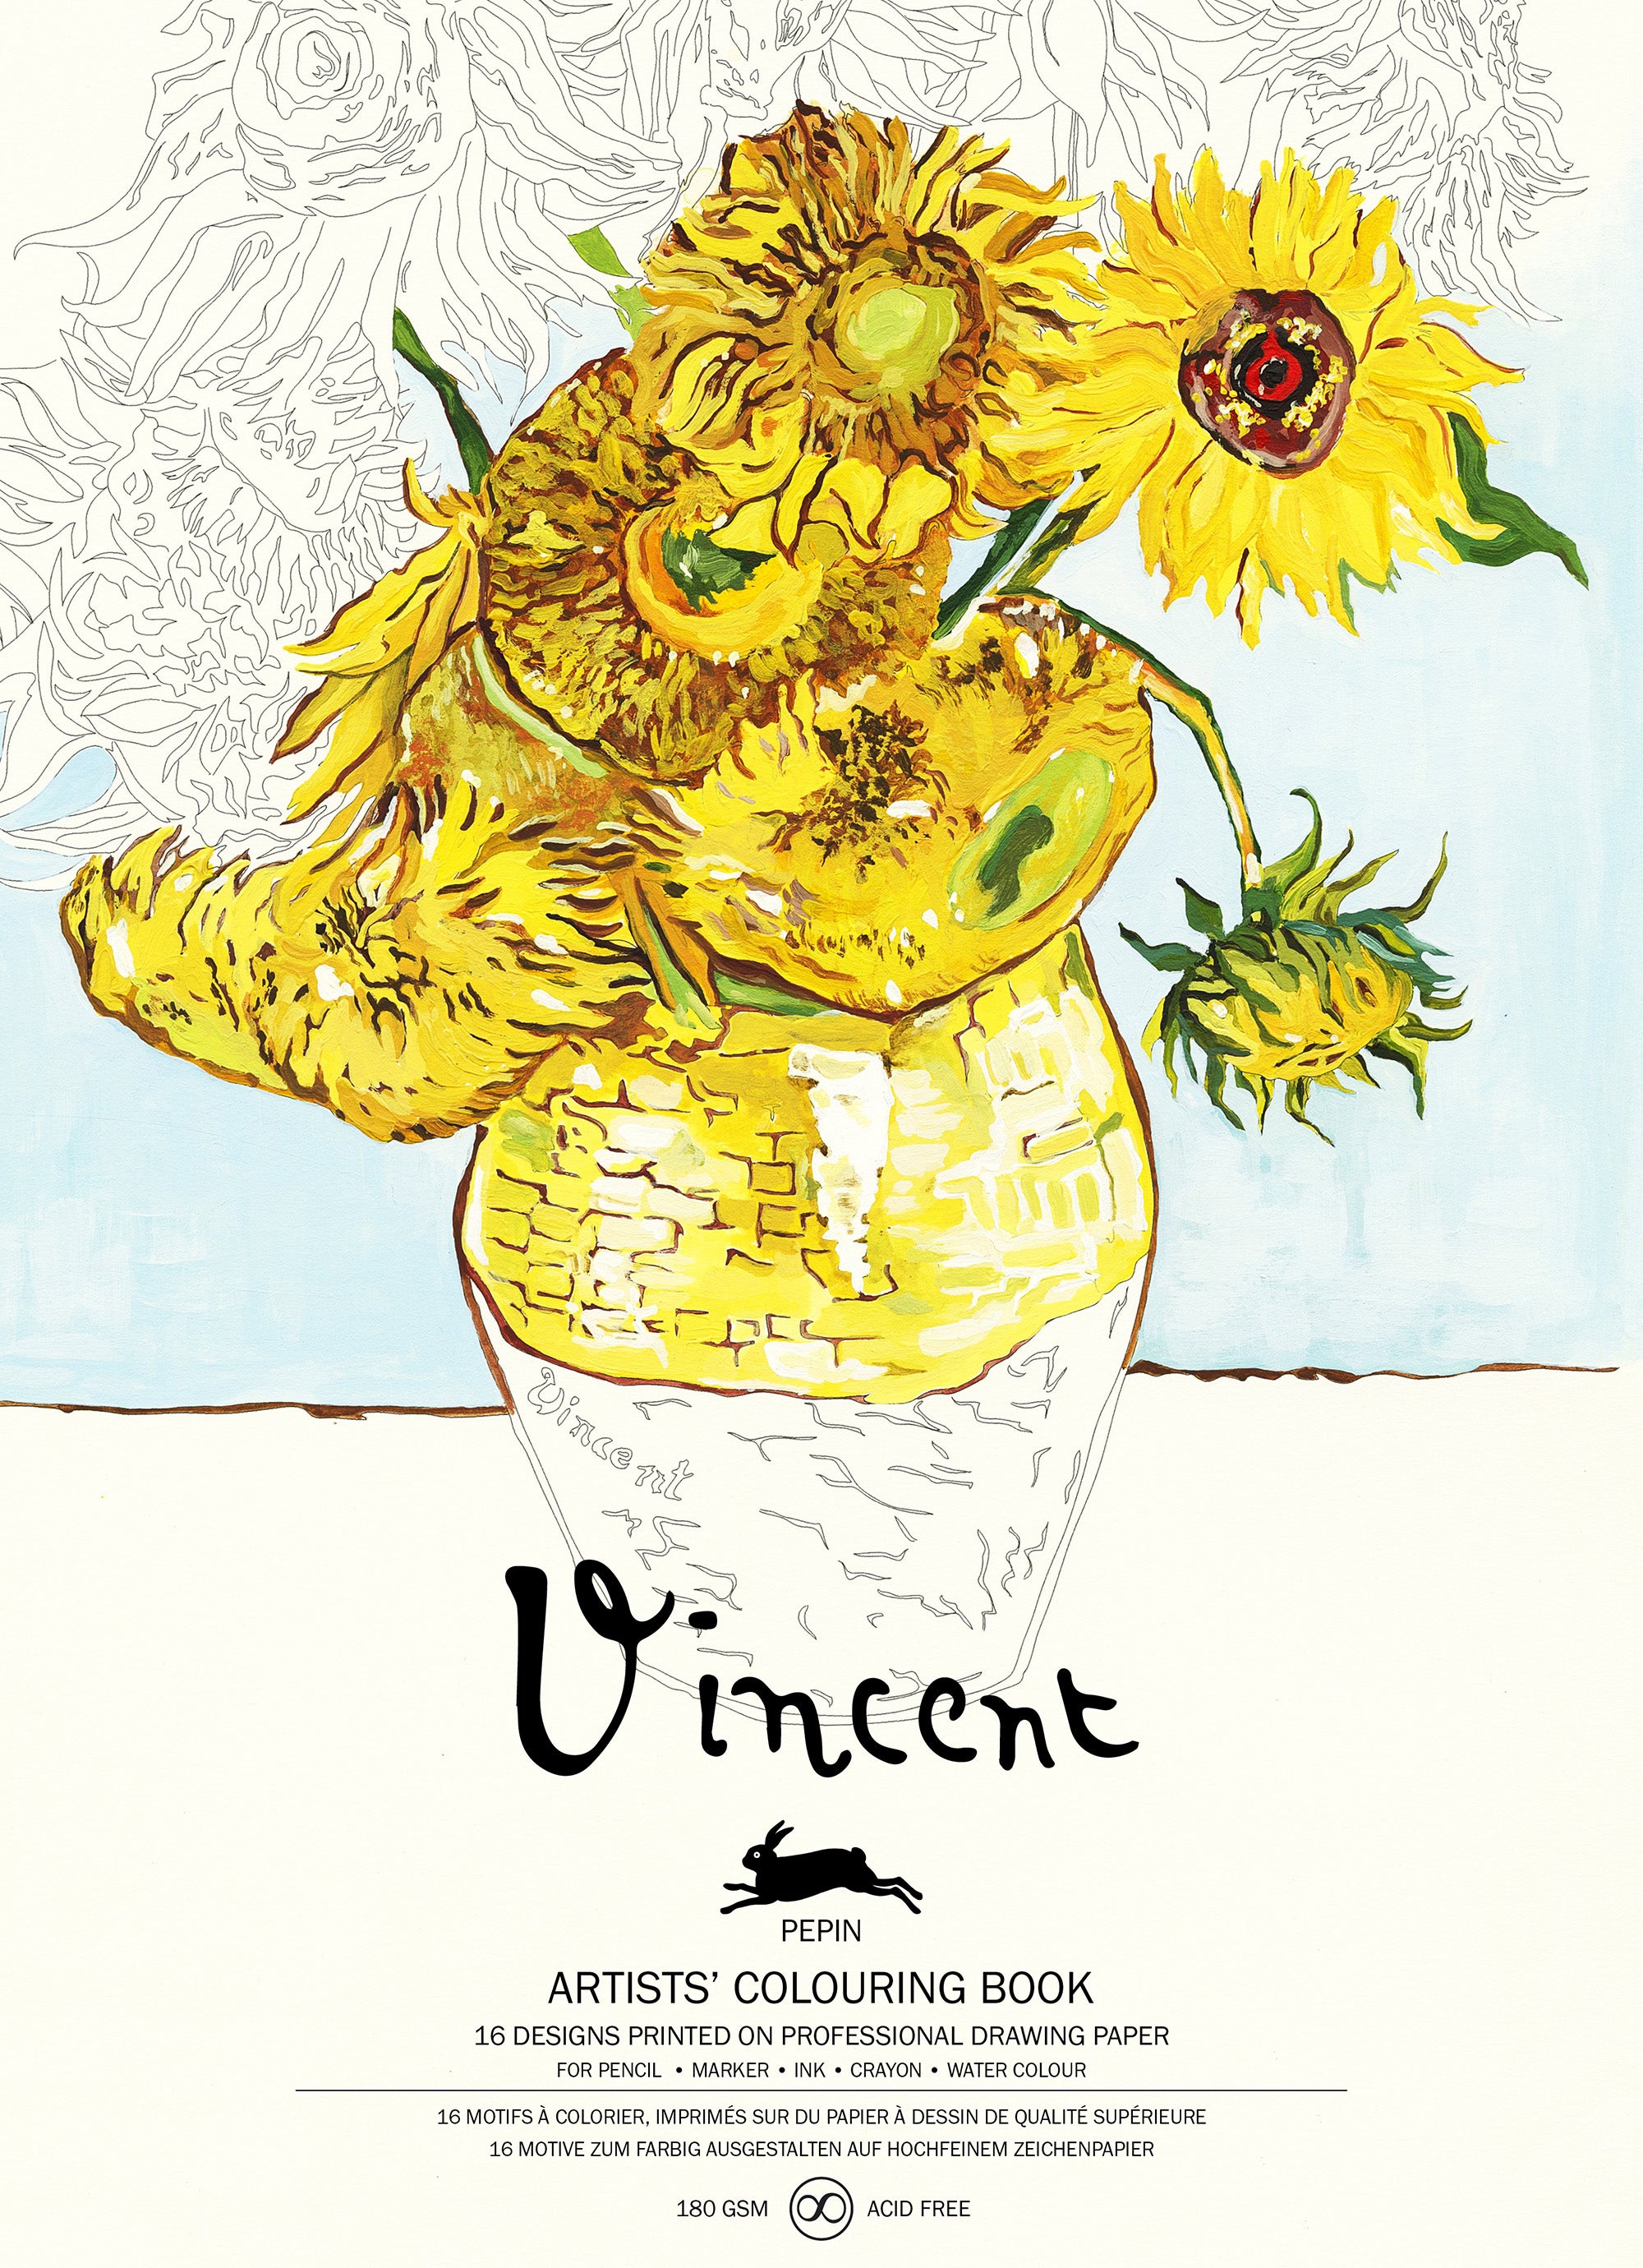 Artists' Coloring Book - Van Gogh